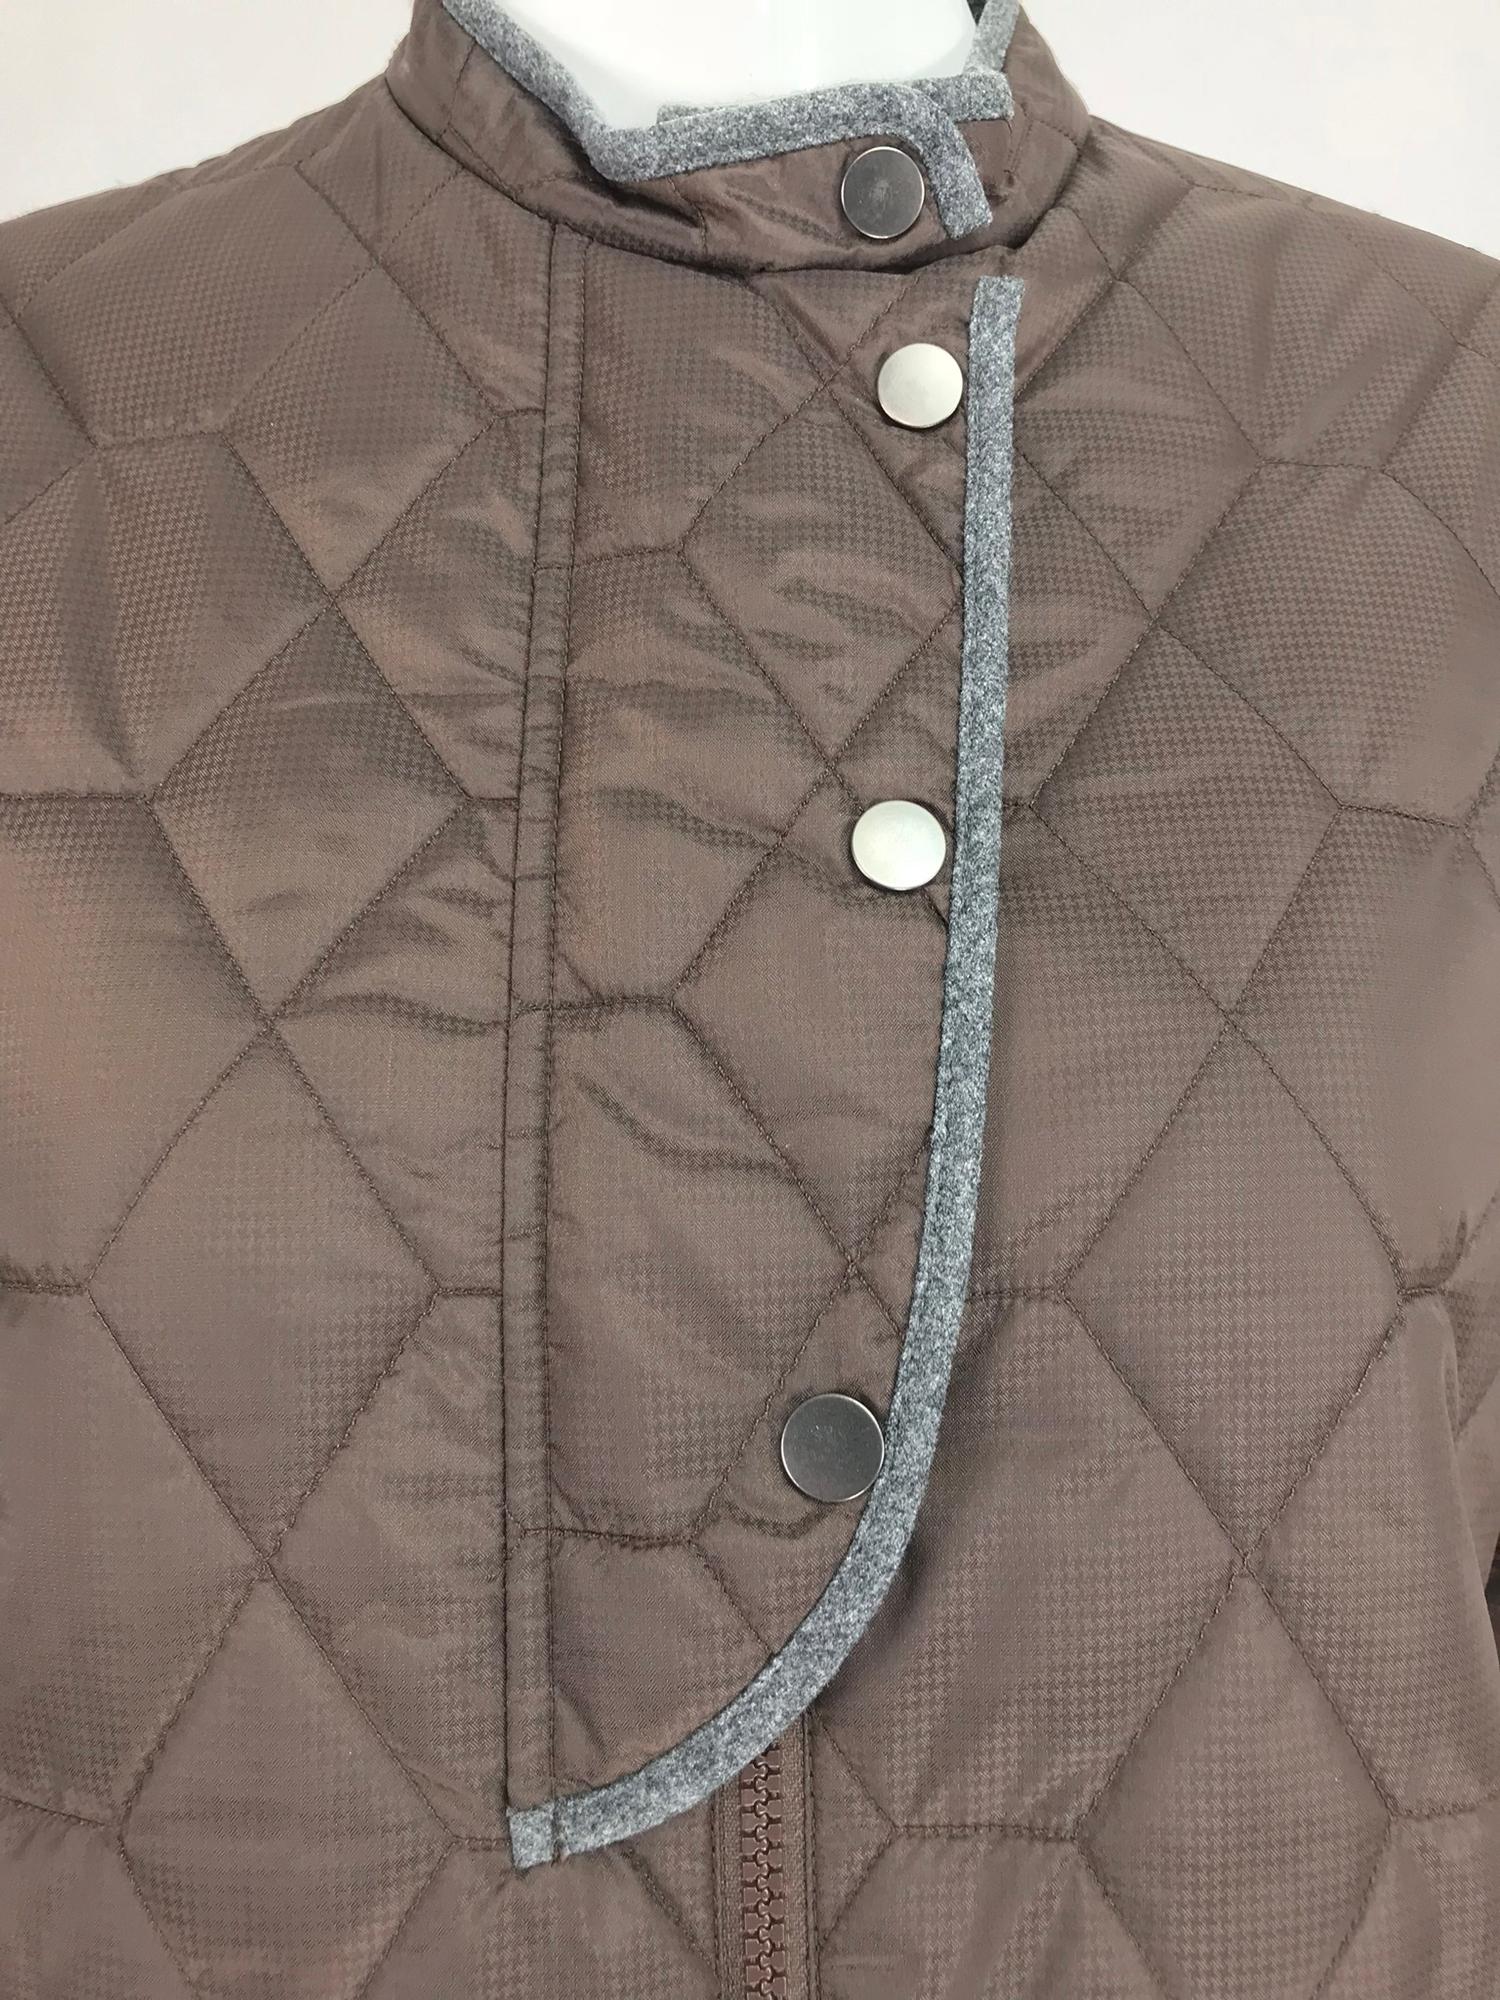 Brunello Cucinelli Chocolate Brown geometric pattern Quilted Sport Jacket 42 10